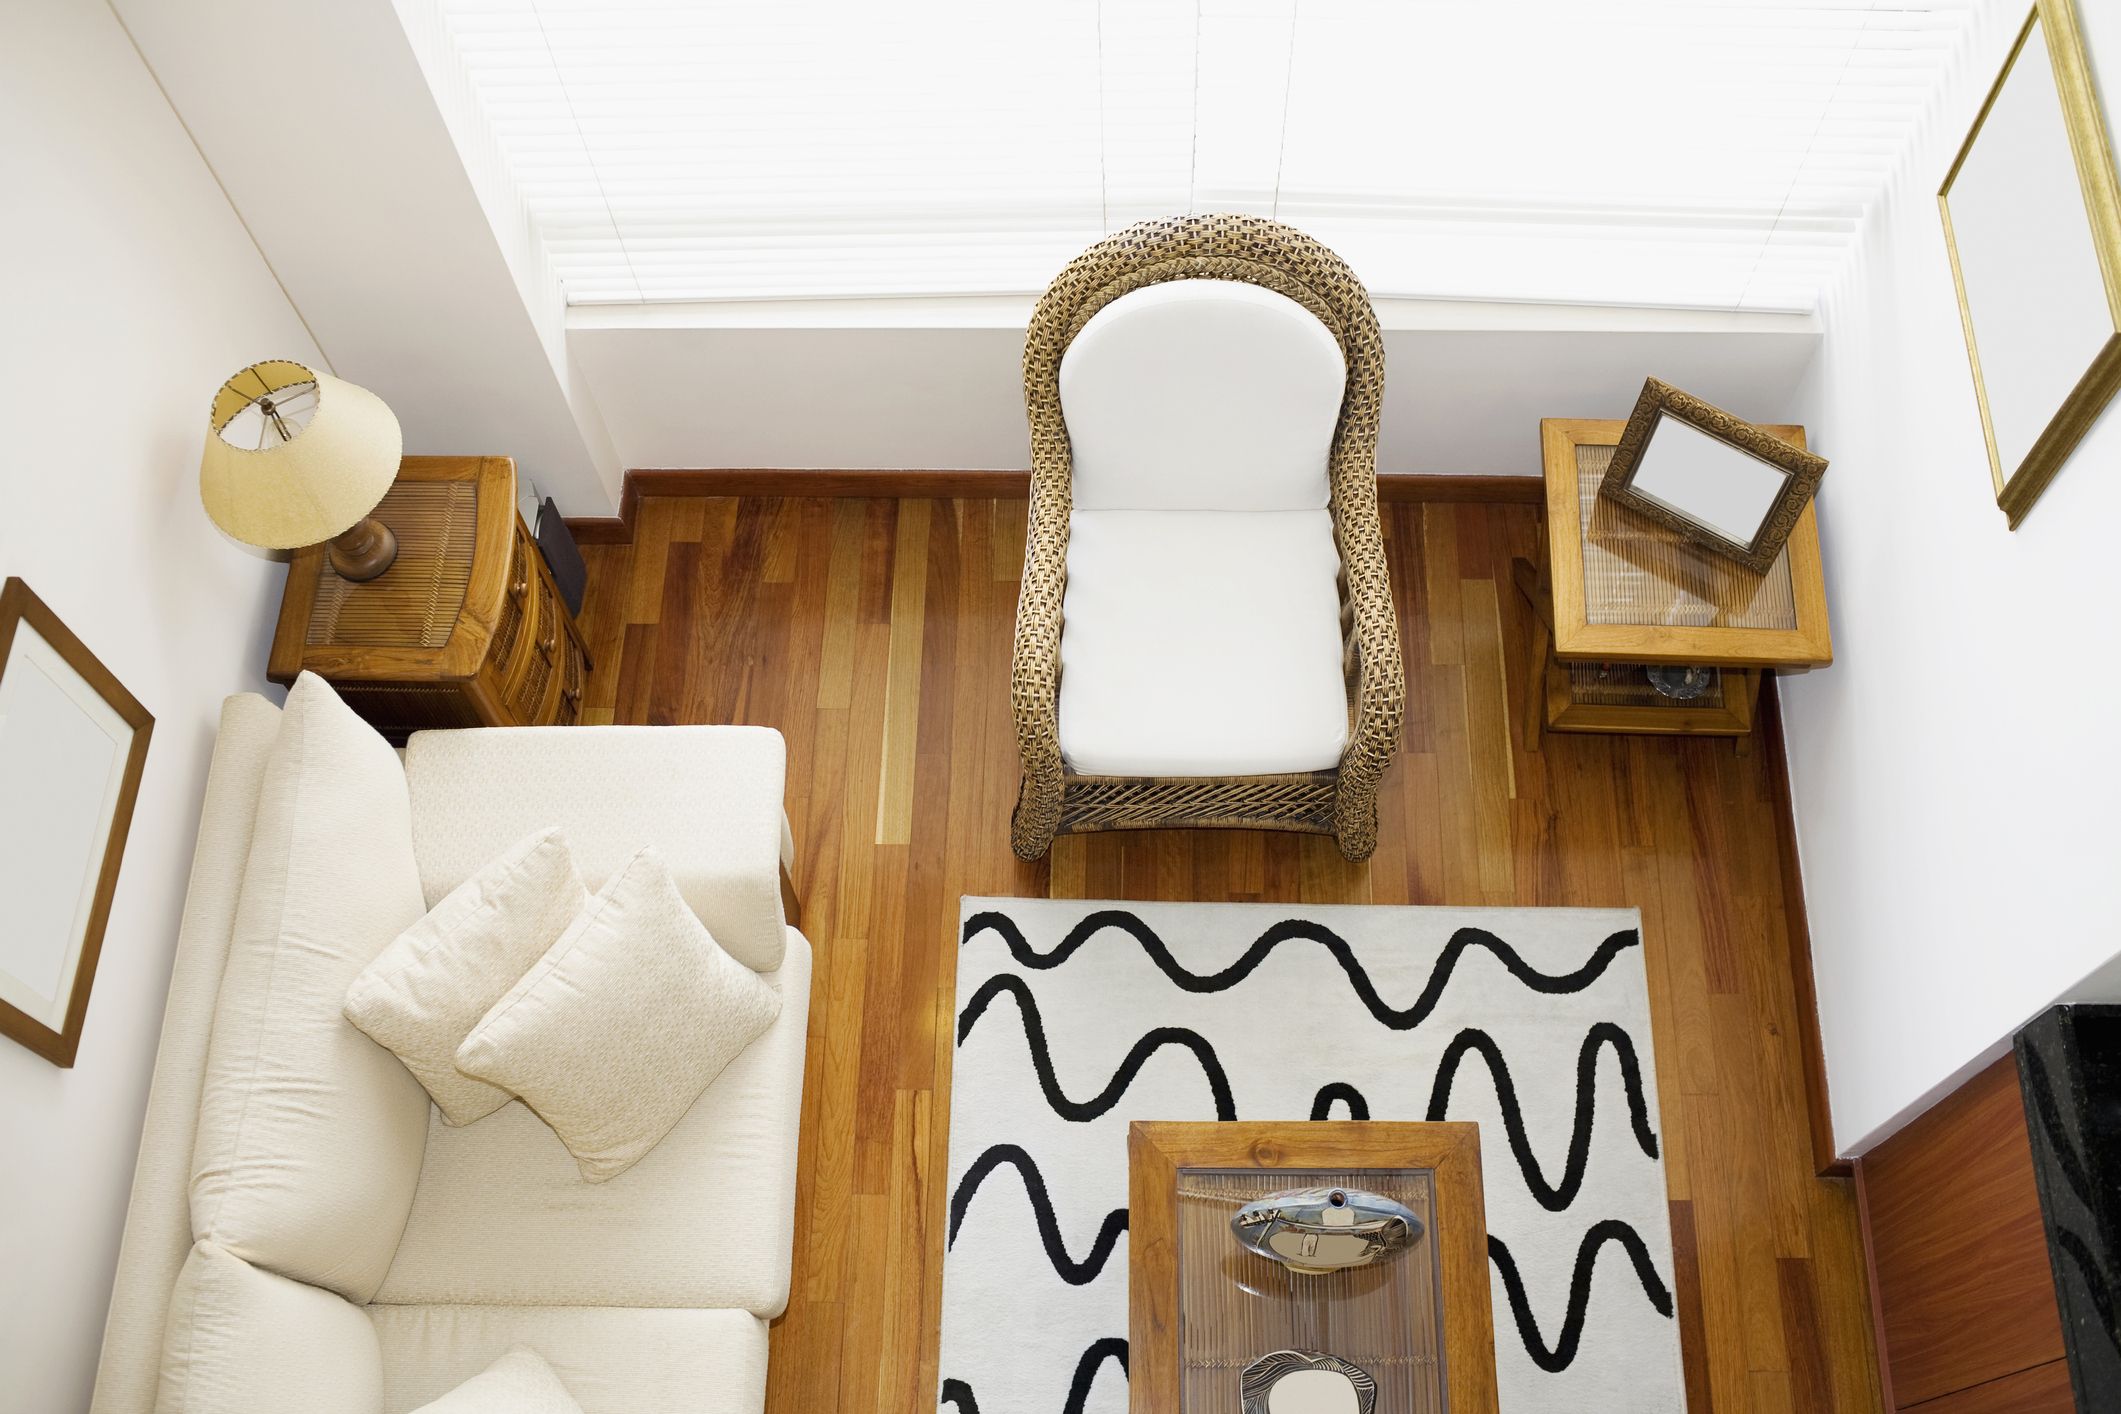 stop putting hardwood floors in every room